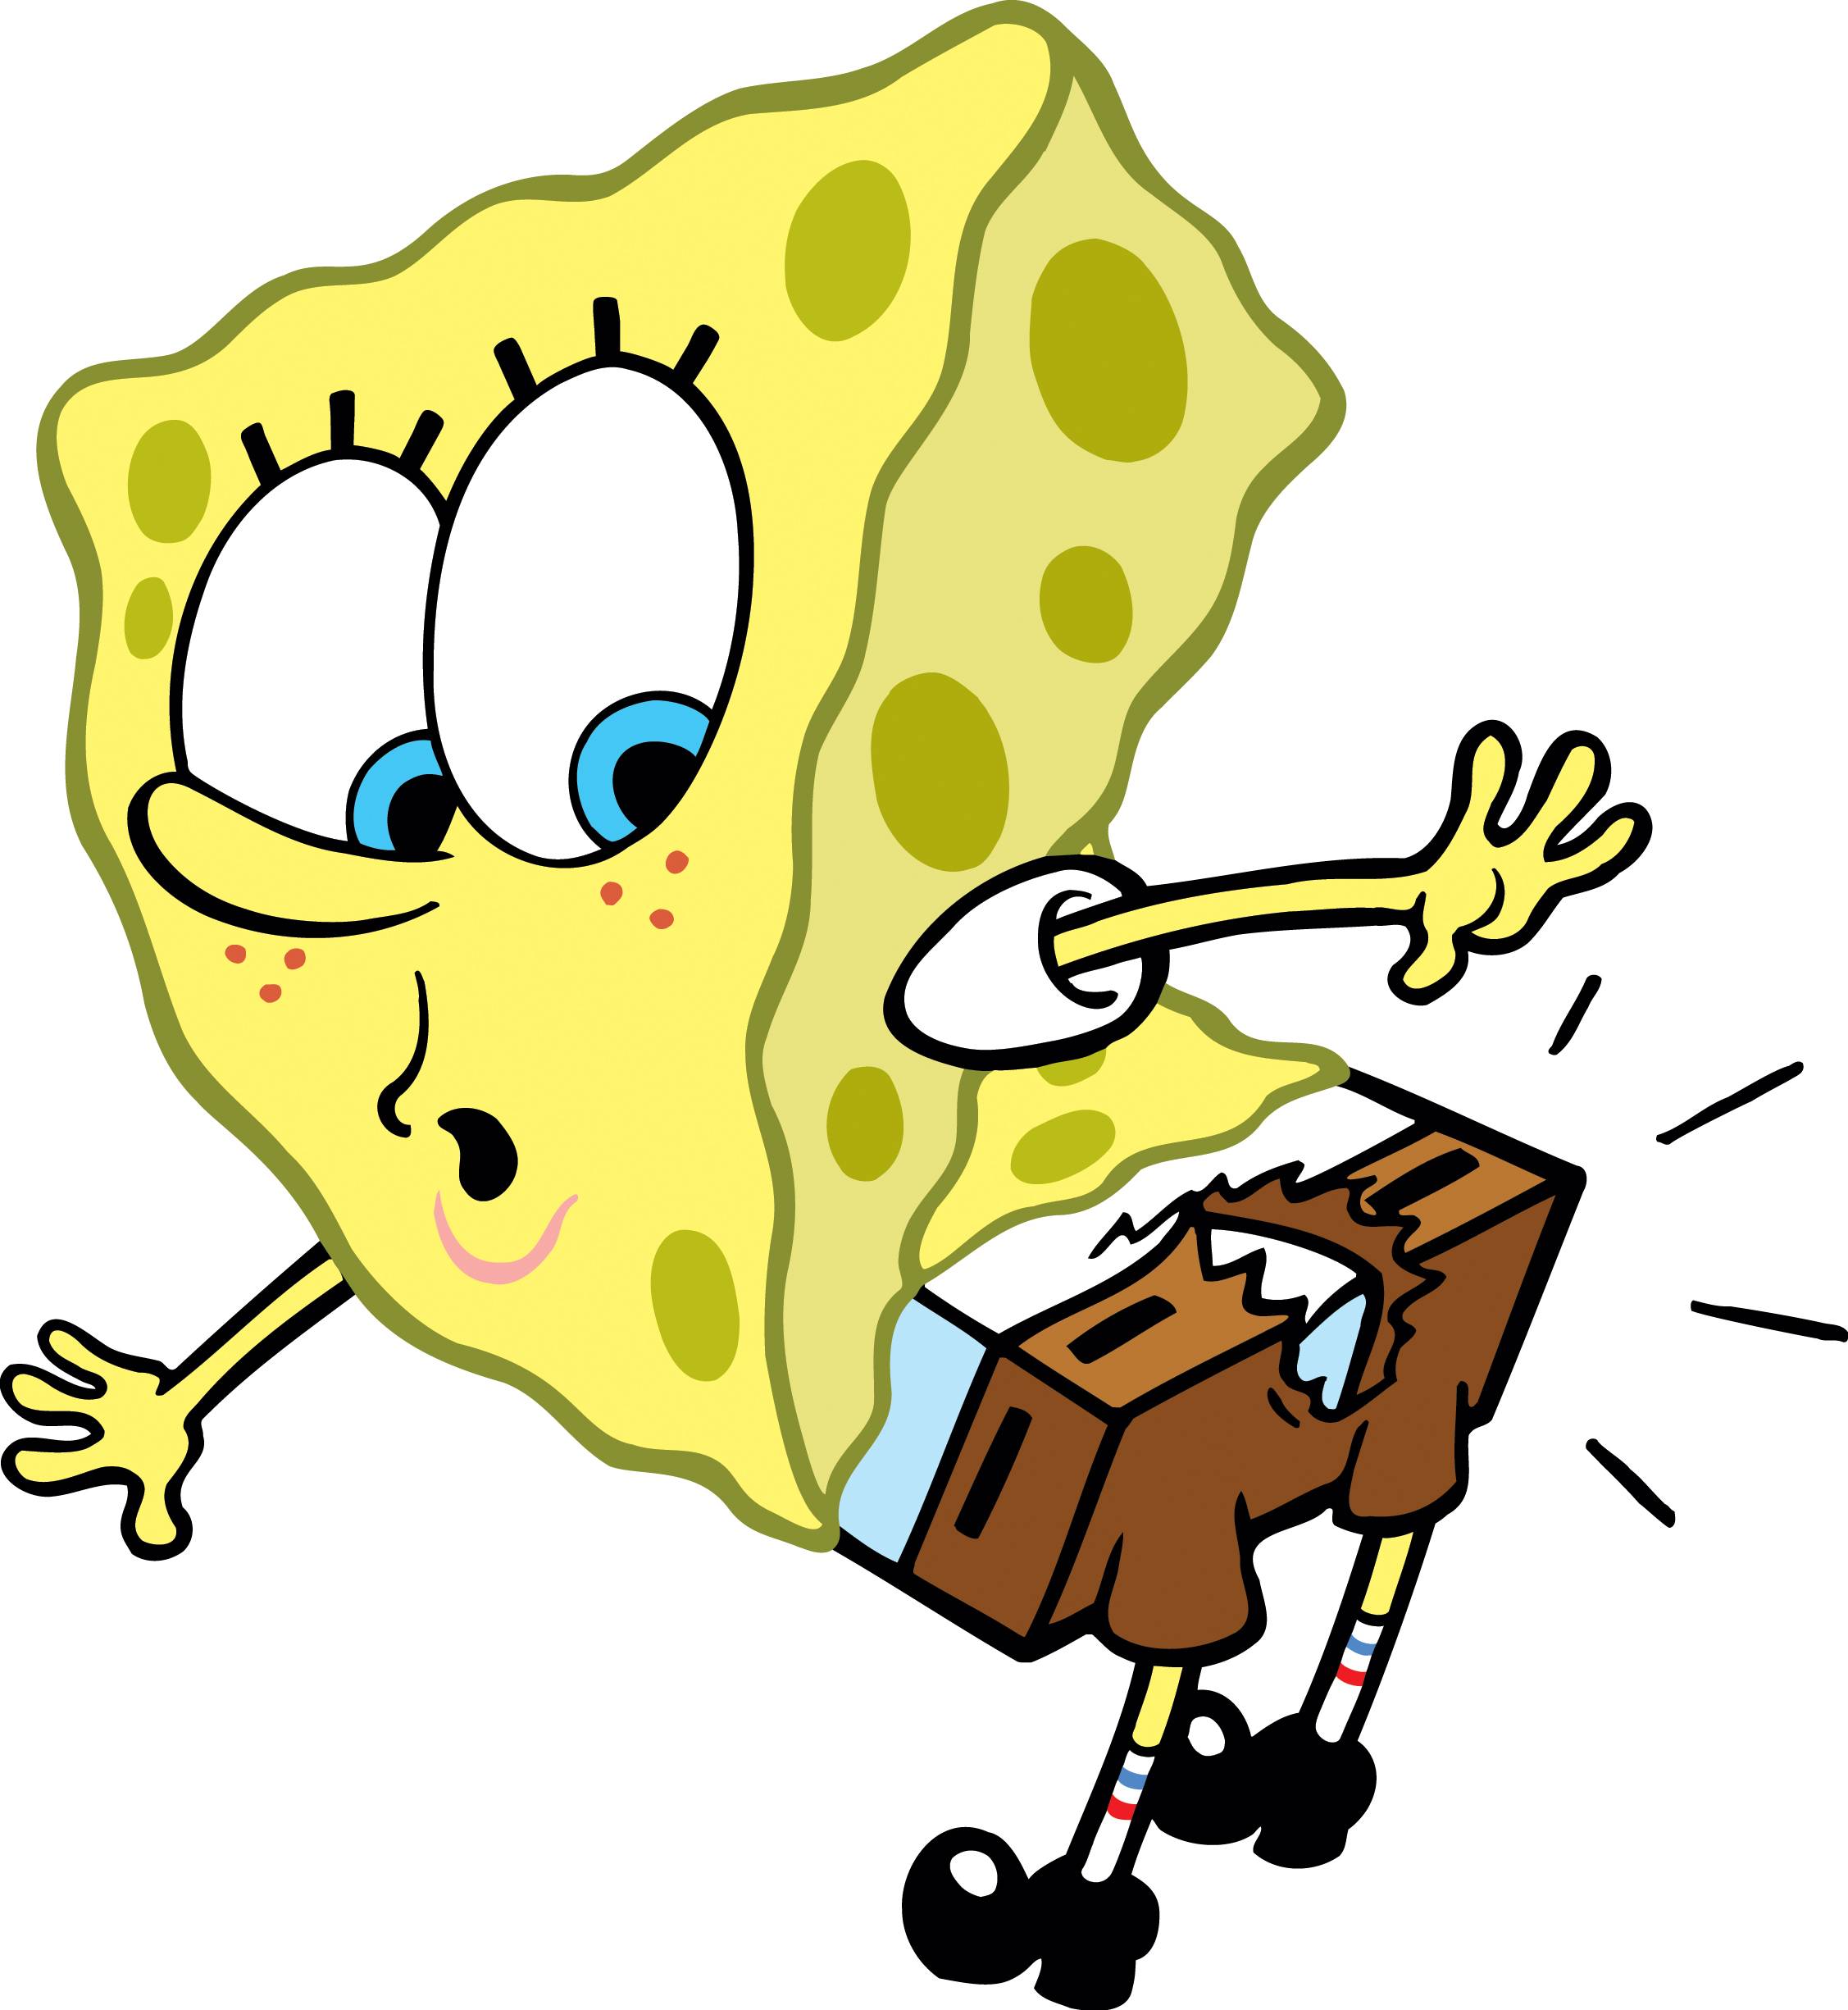 kick my *** :P - SpongeBoB Square Pants Picture